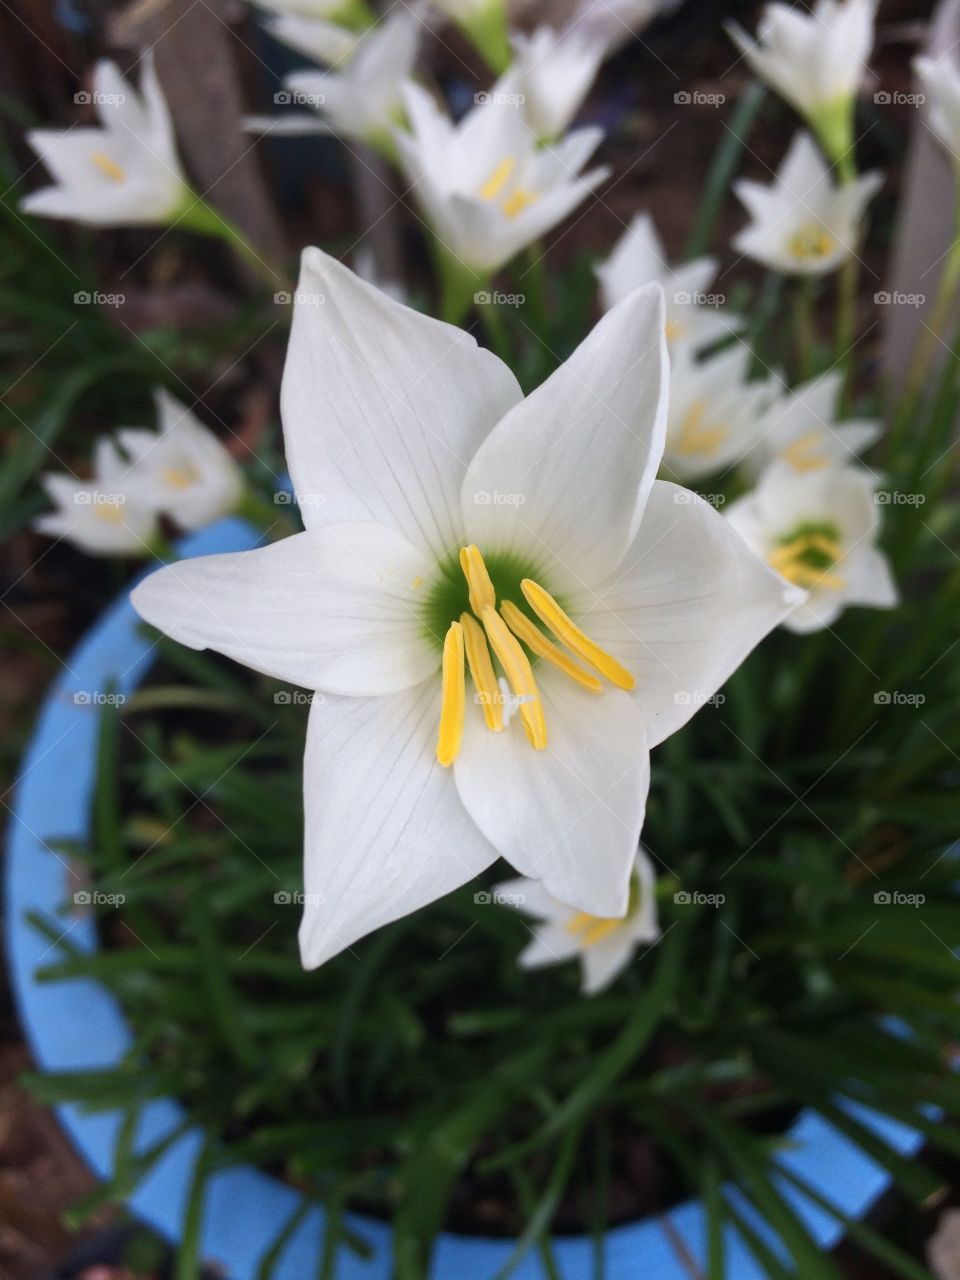 Tiny white lily